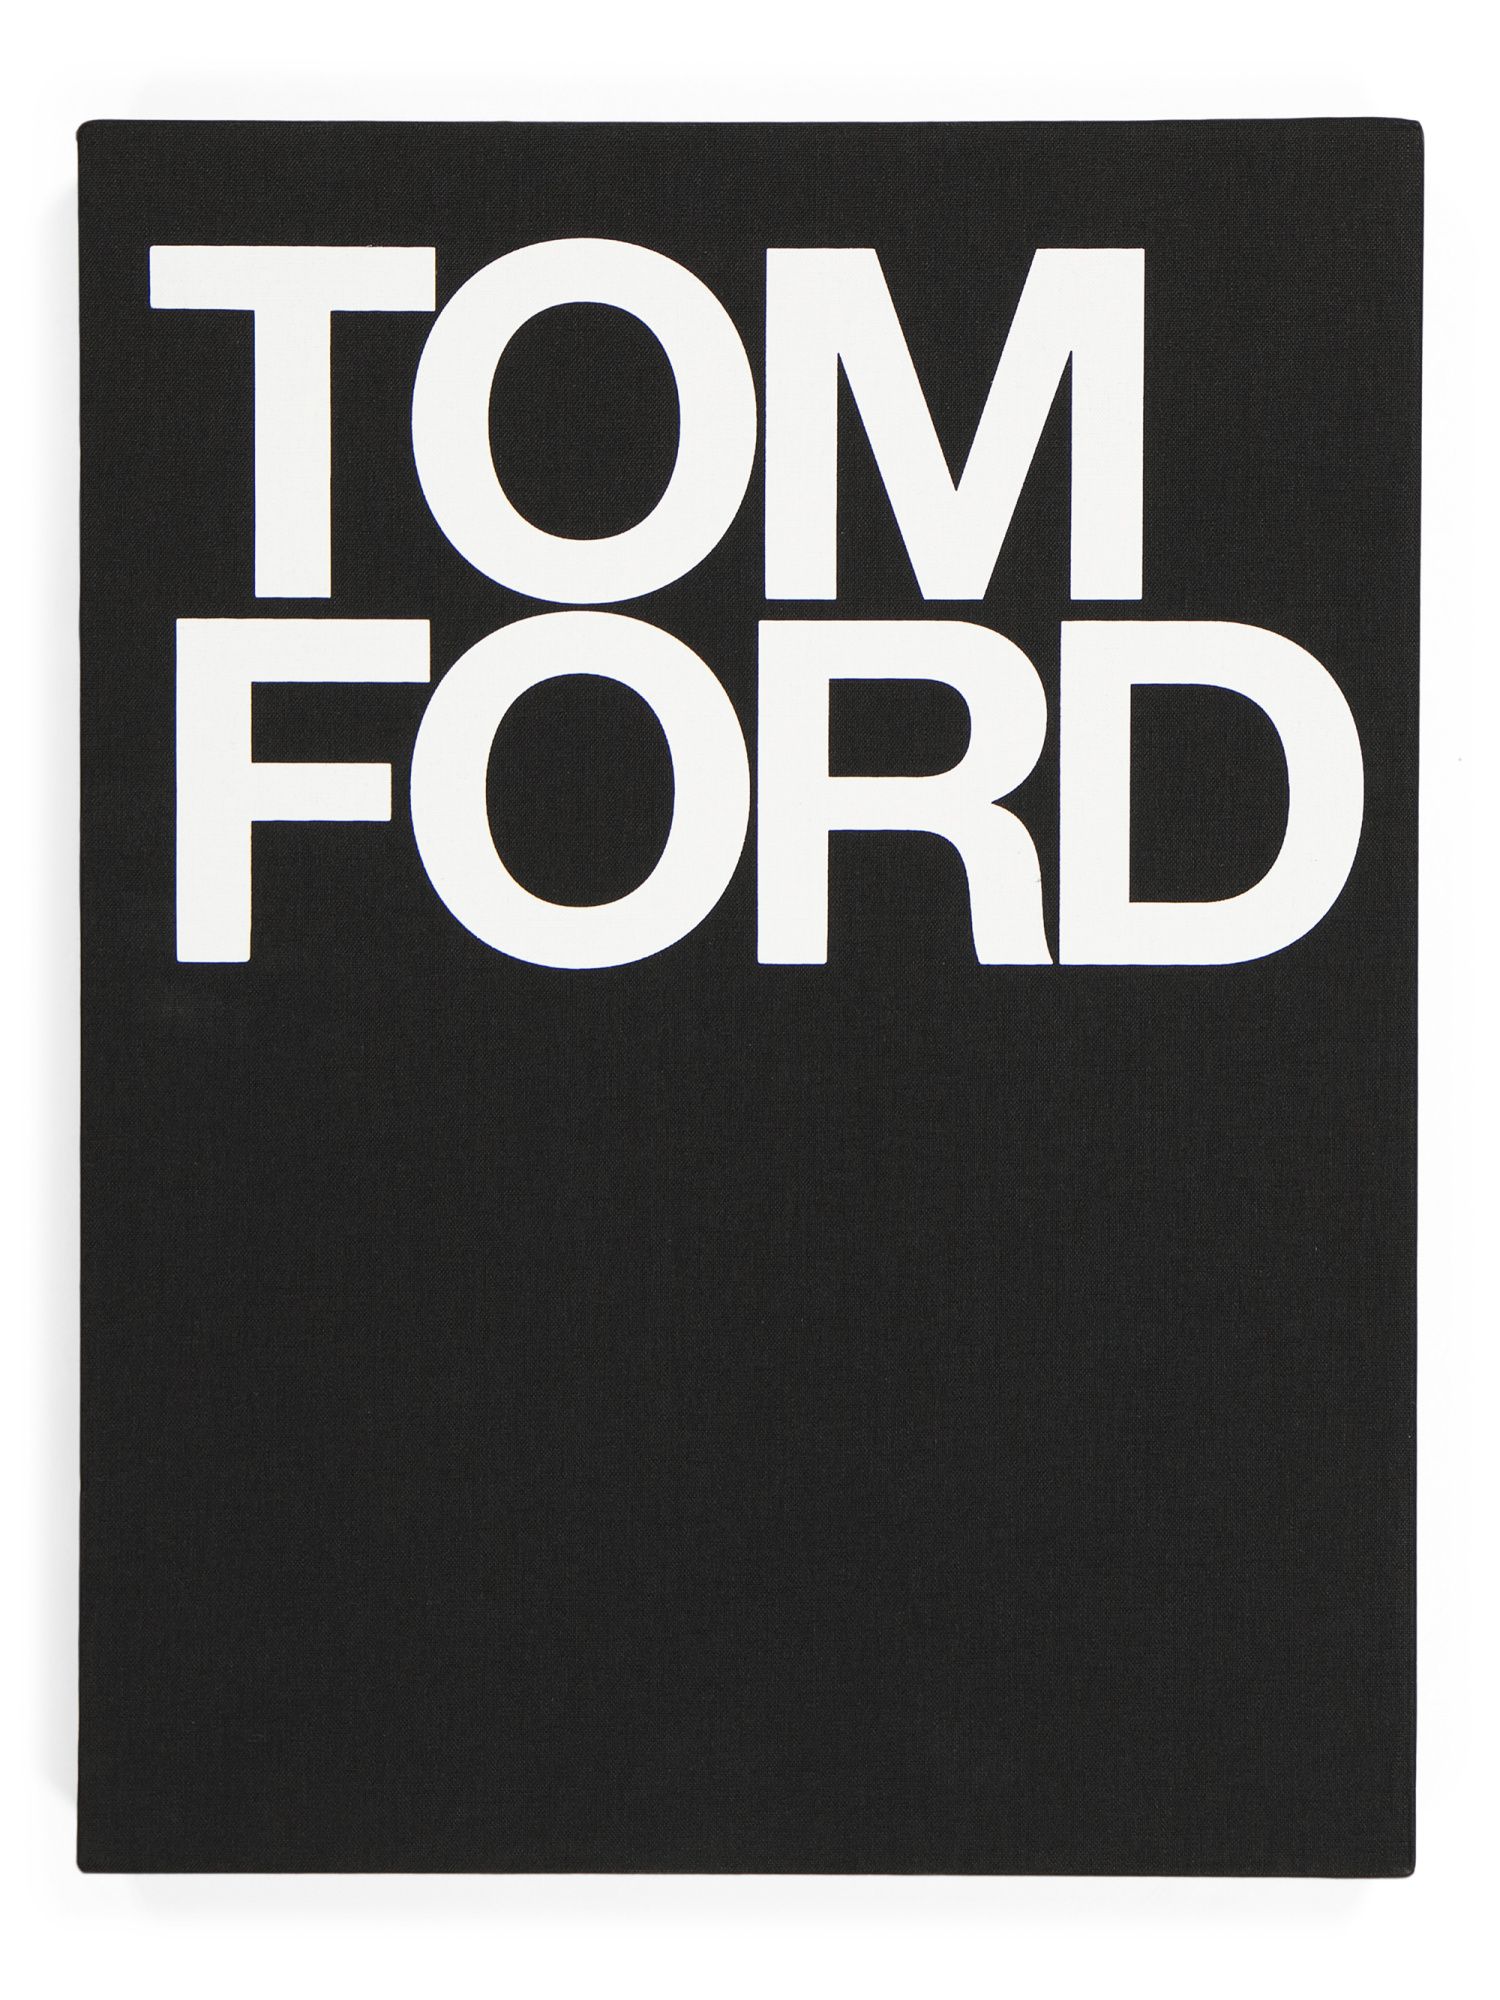 Tom Ford | Marshalls